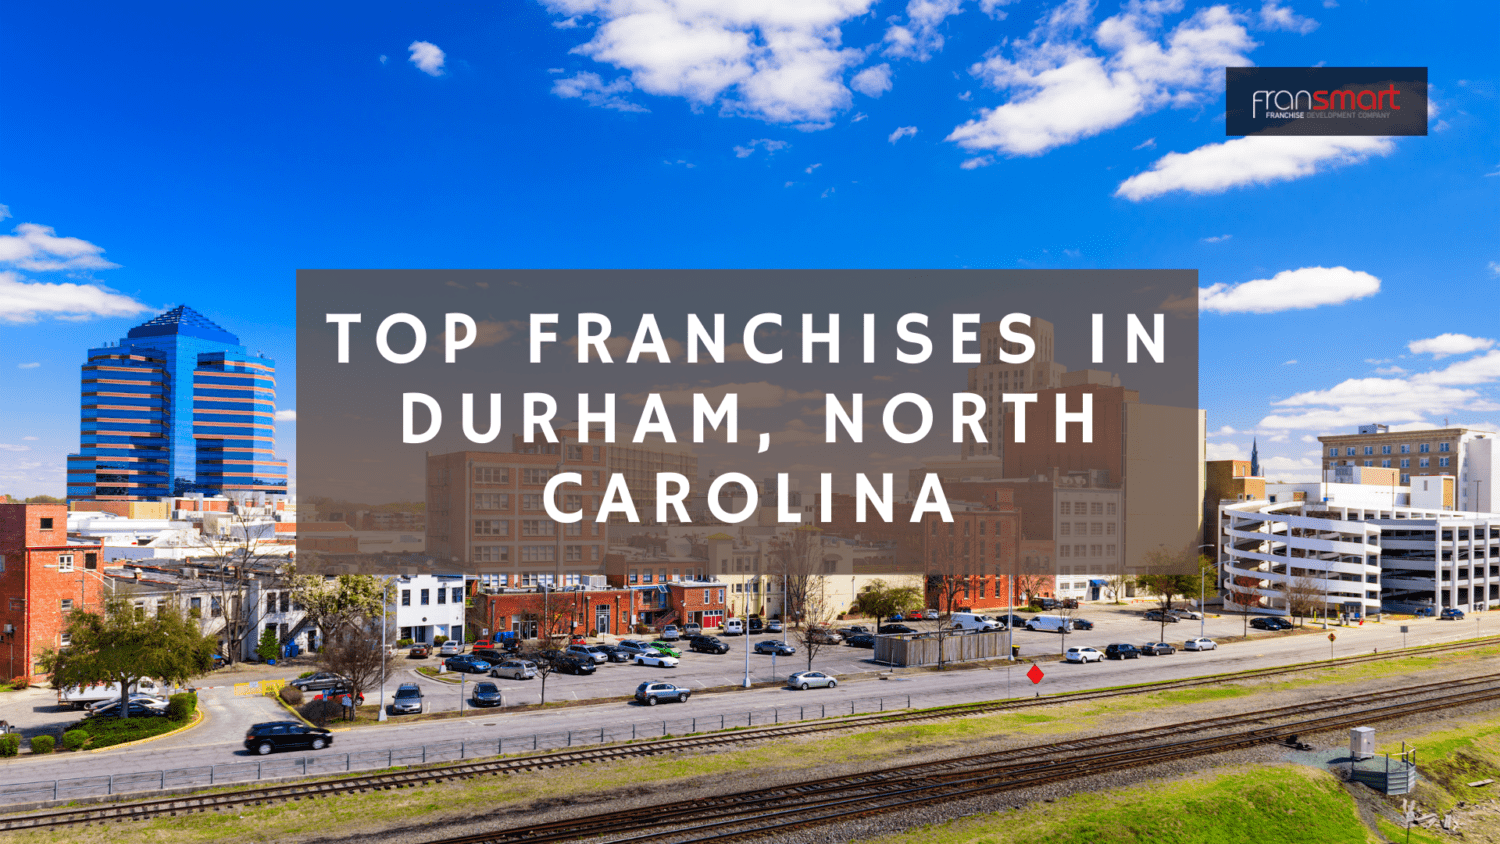 Top Franchises in Durham, North Carolina